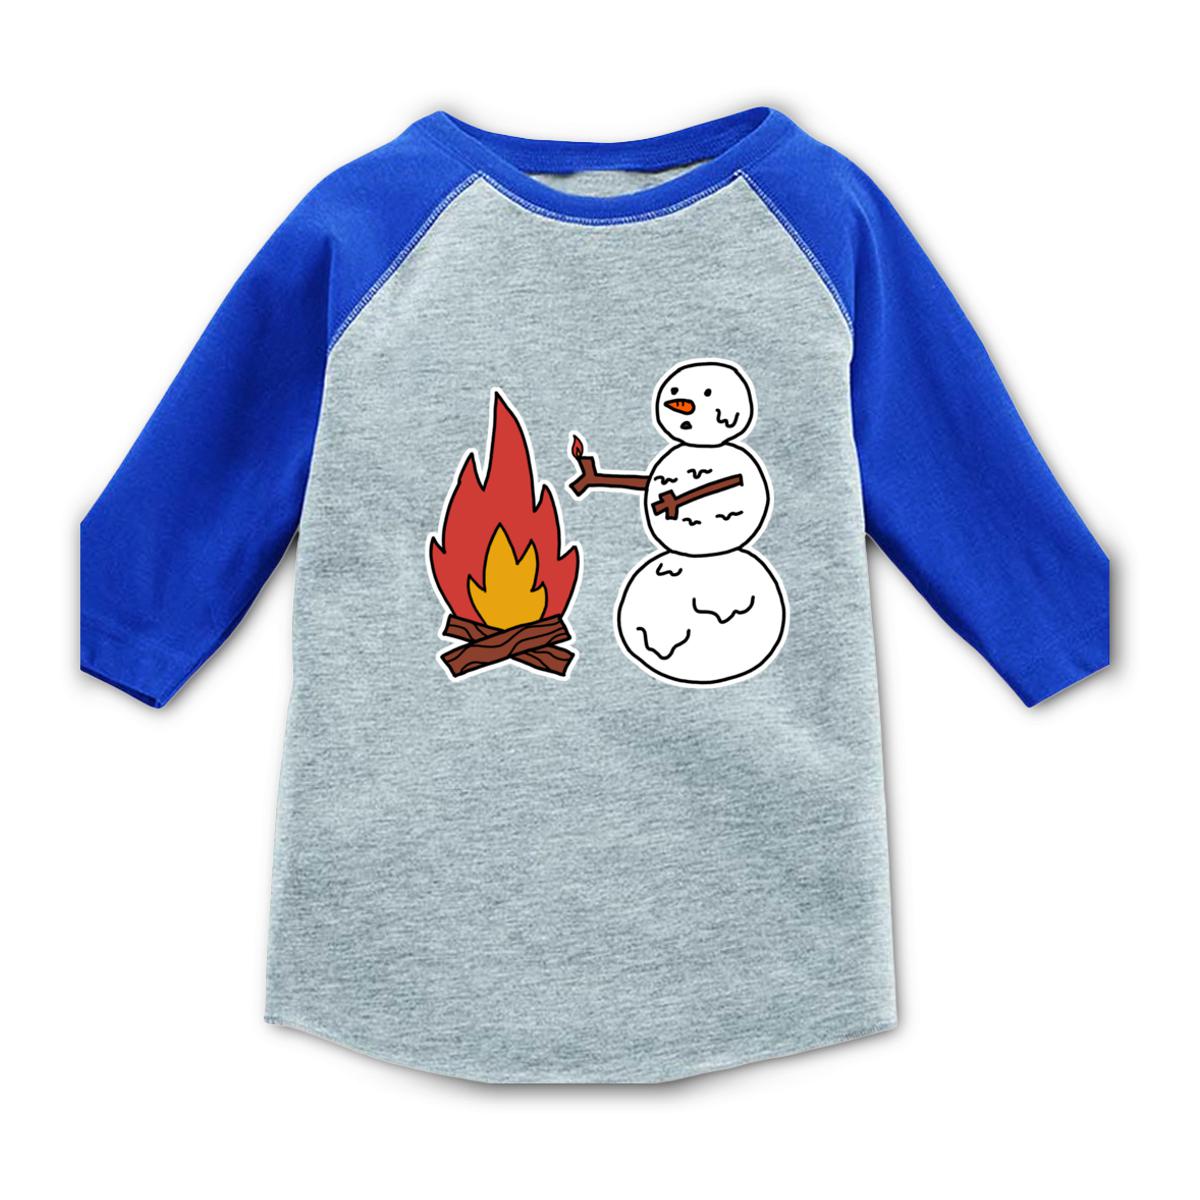 Snowman Keeping Warm Toddler Raglan Tee 2T heather-royal